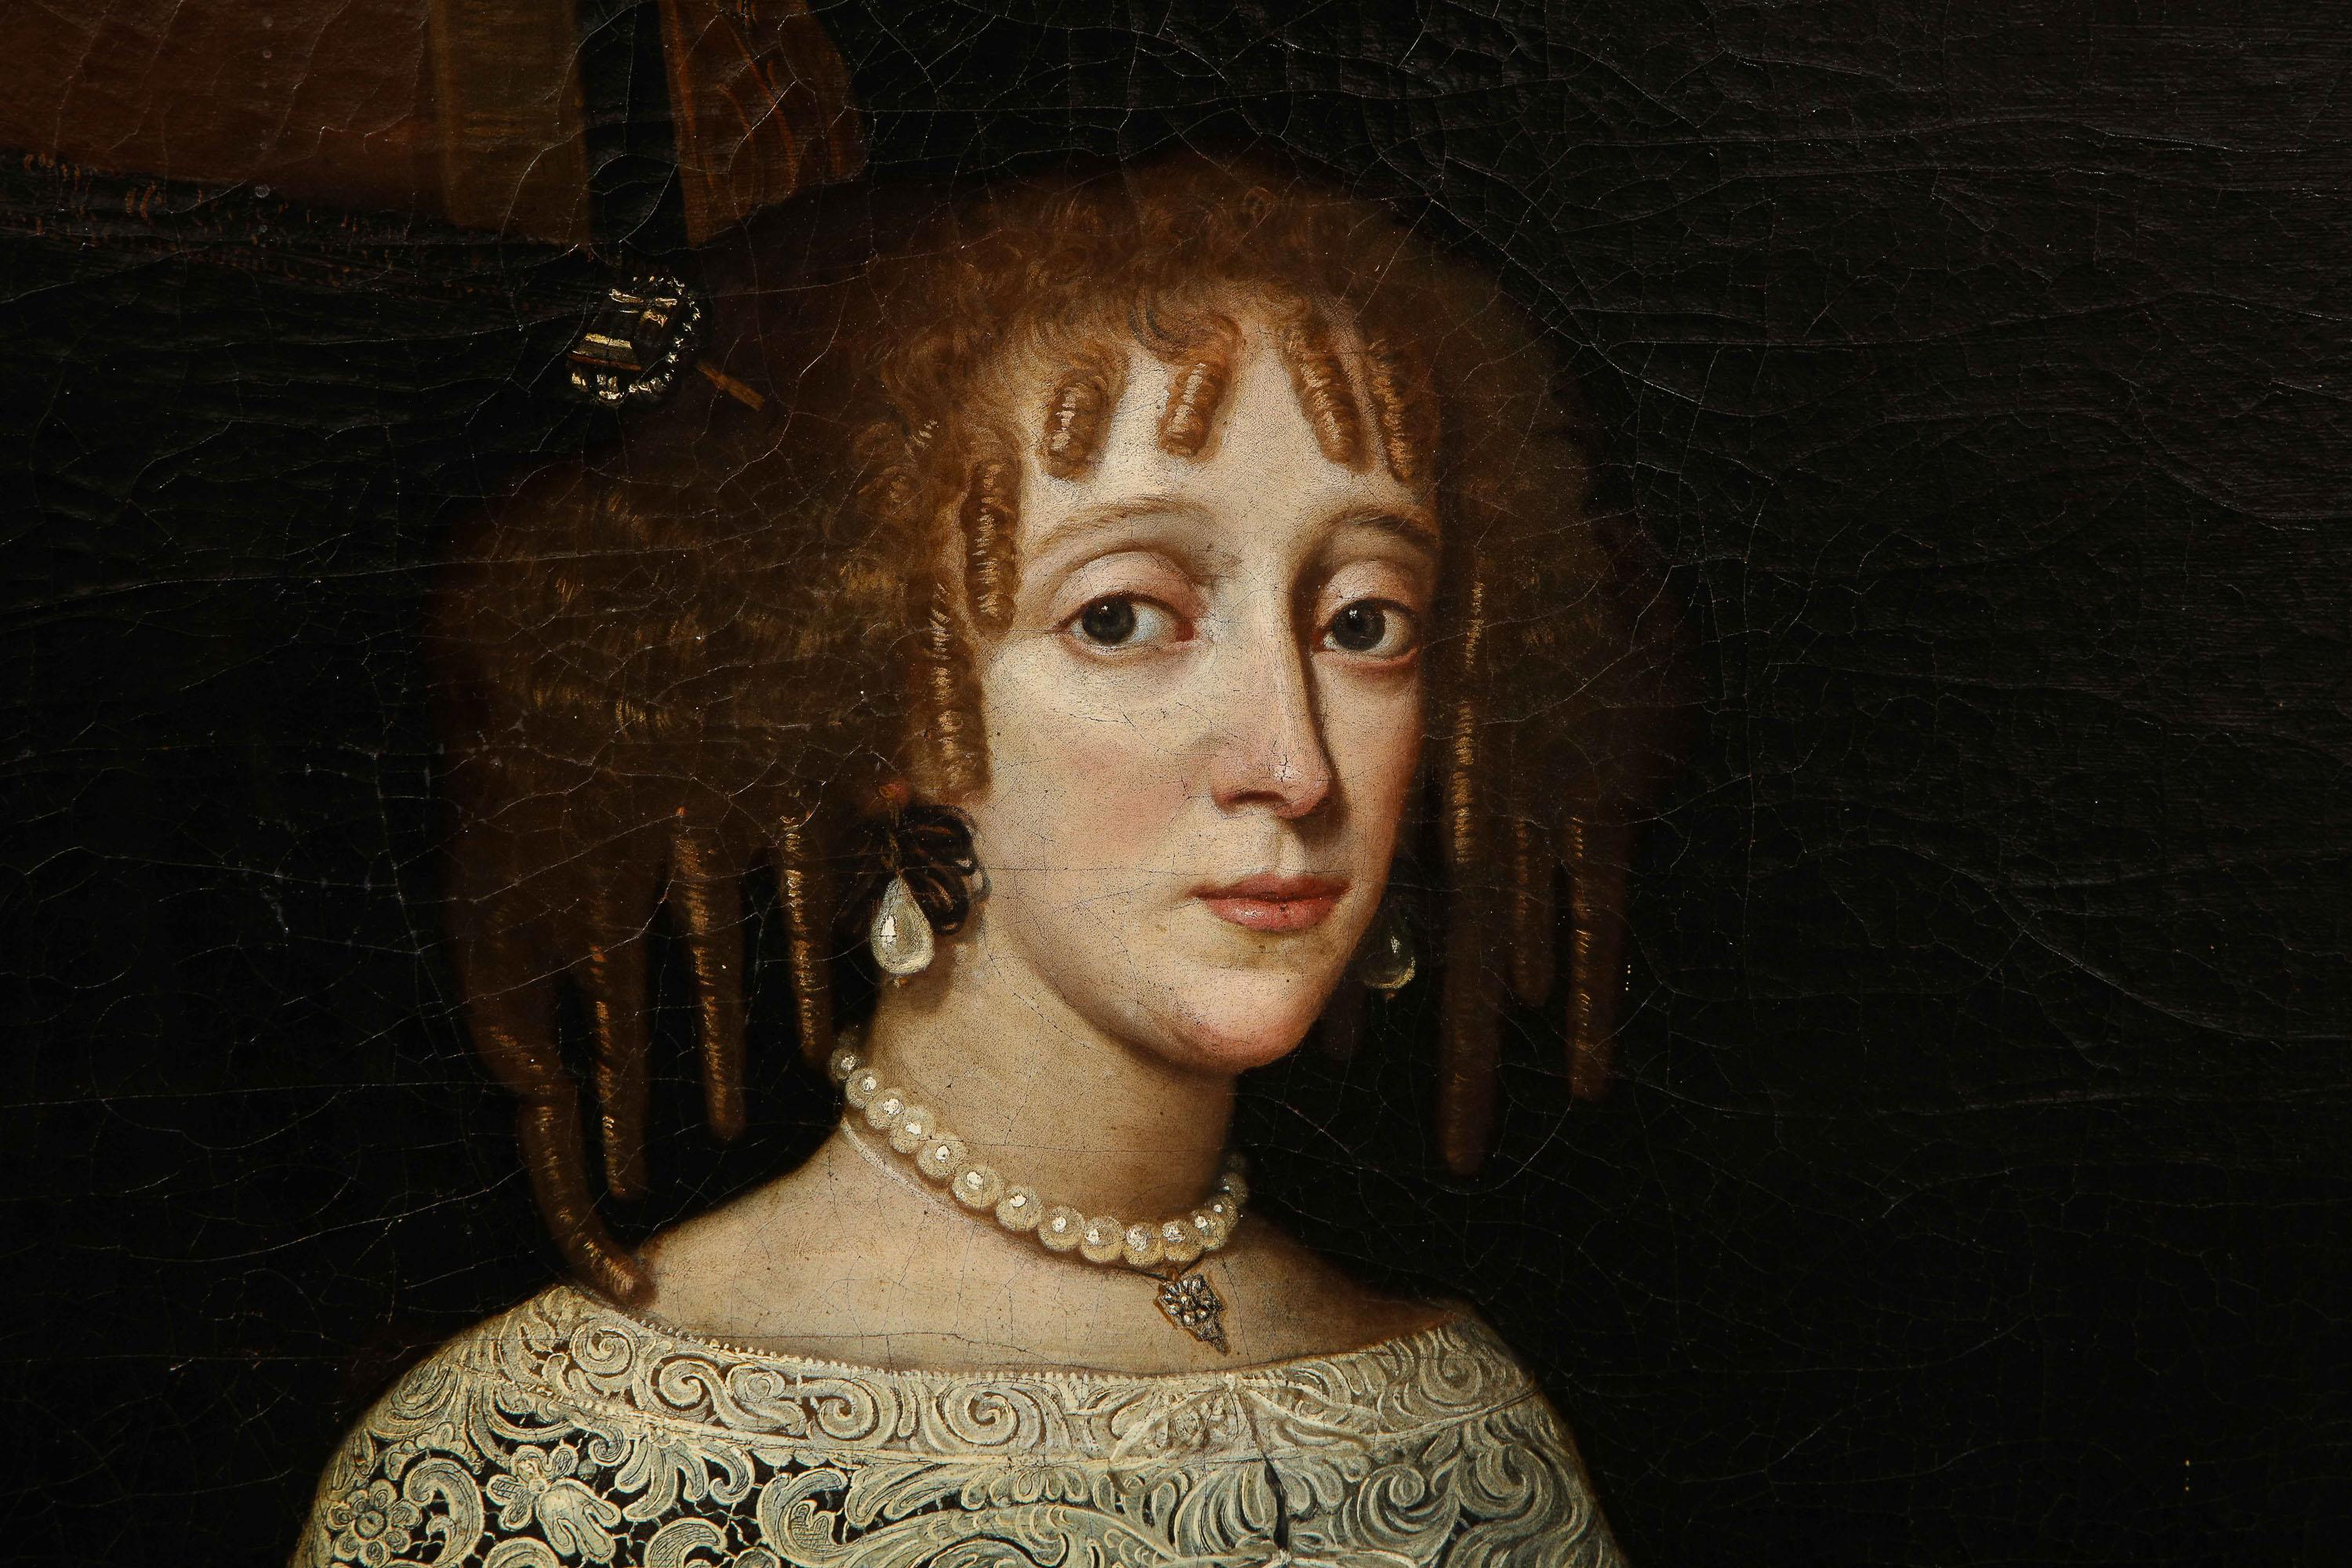 17th century noblewoman